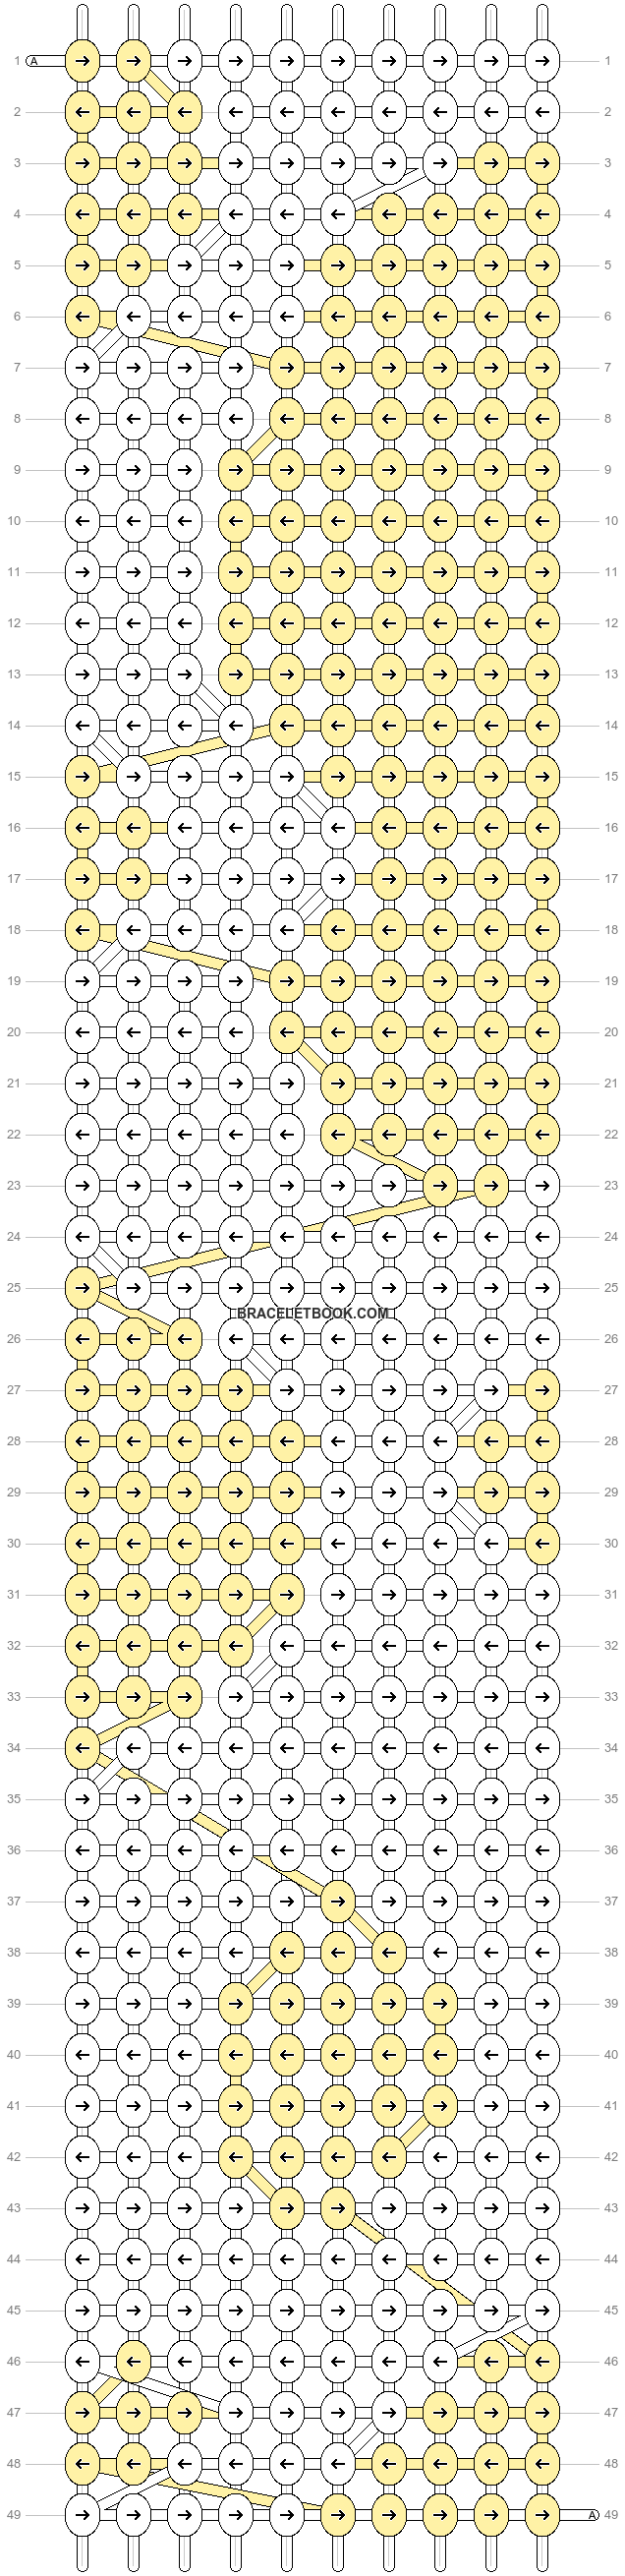 Alpha pattern #70381 variation #135522 pattern